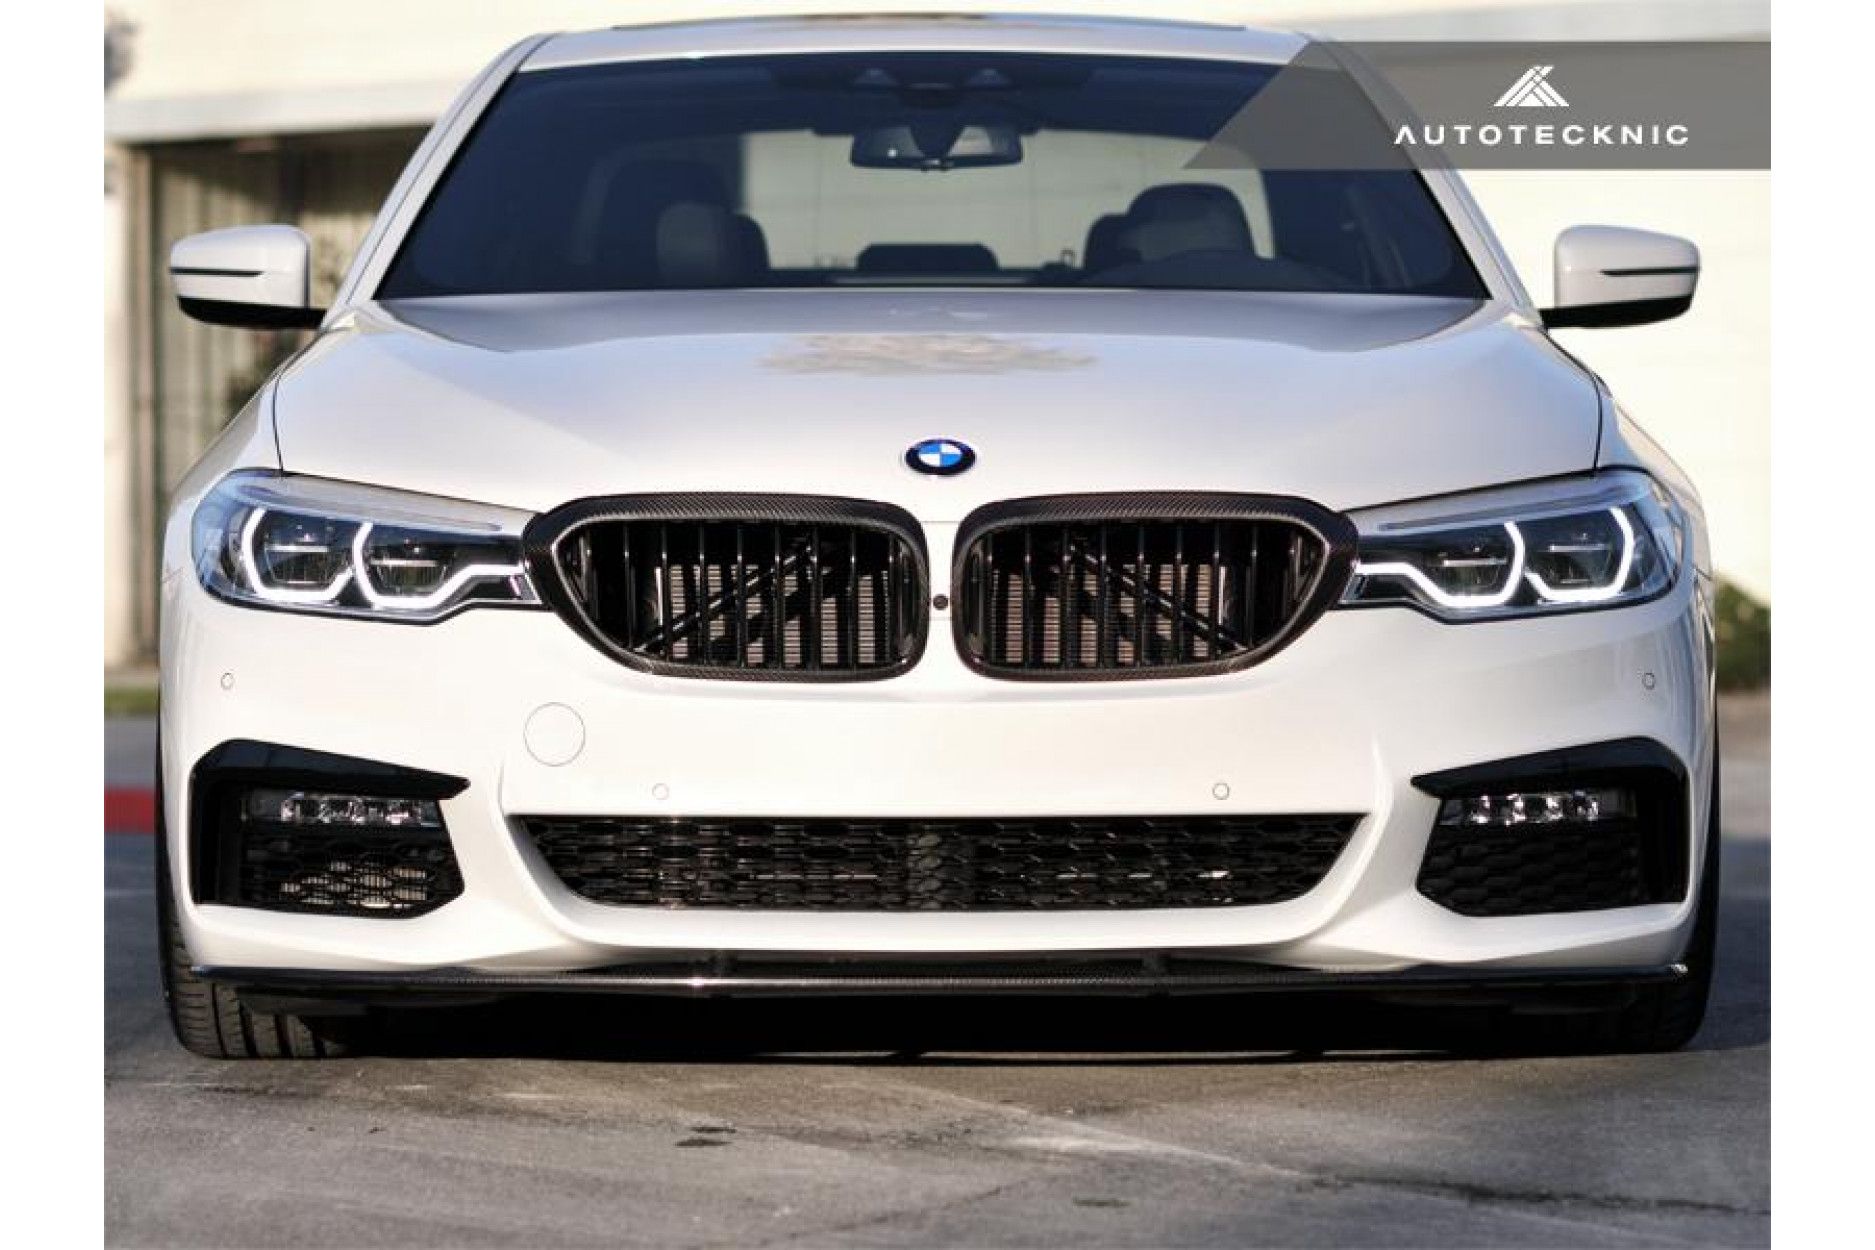 Autotecknic Carbon Frontgrill Cover für BMW 5er G30 2x2 weave - online  kaufen bei CFD